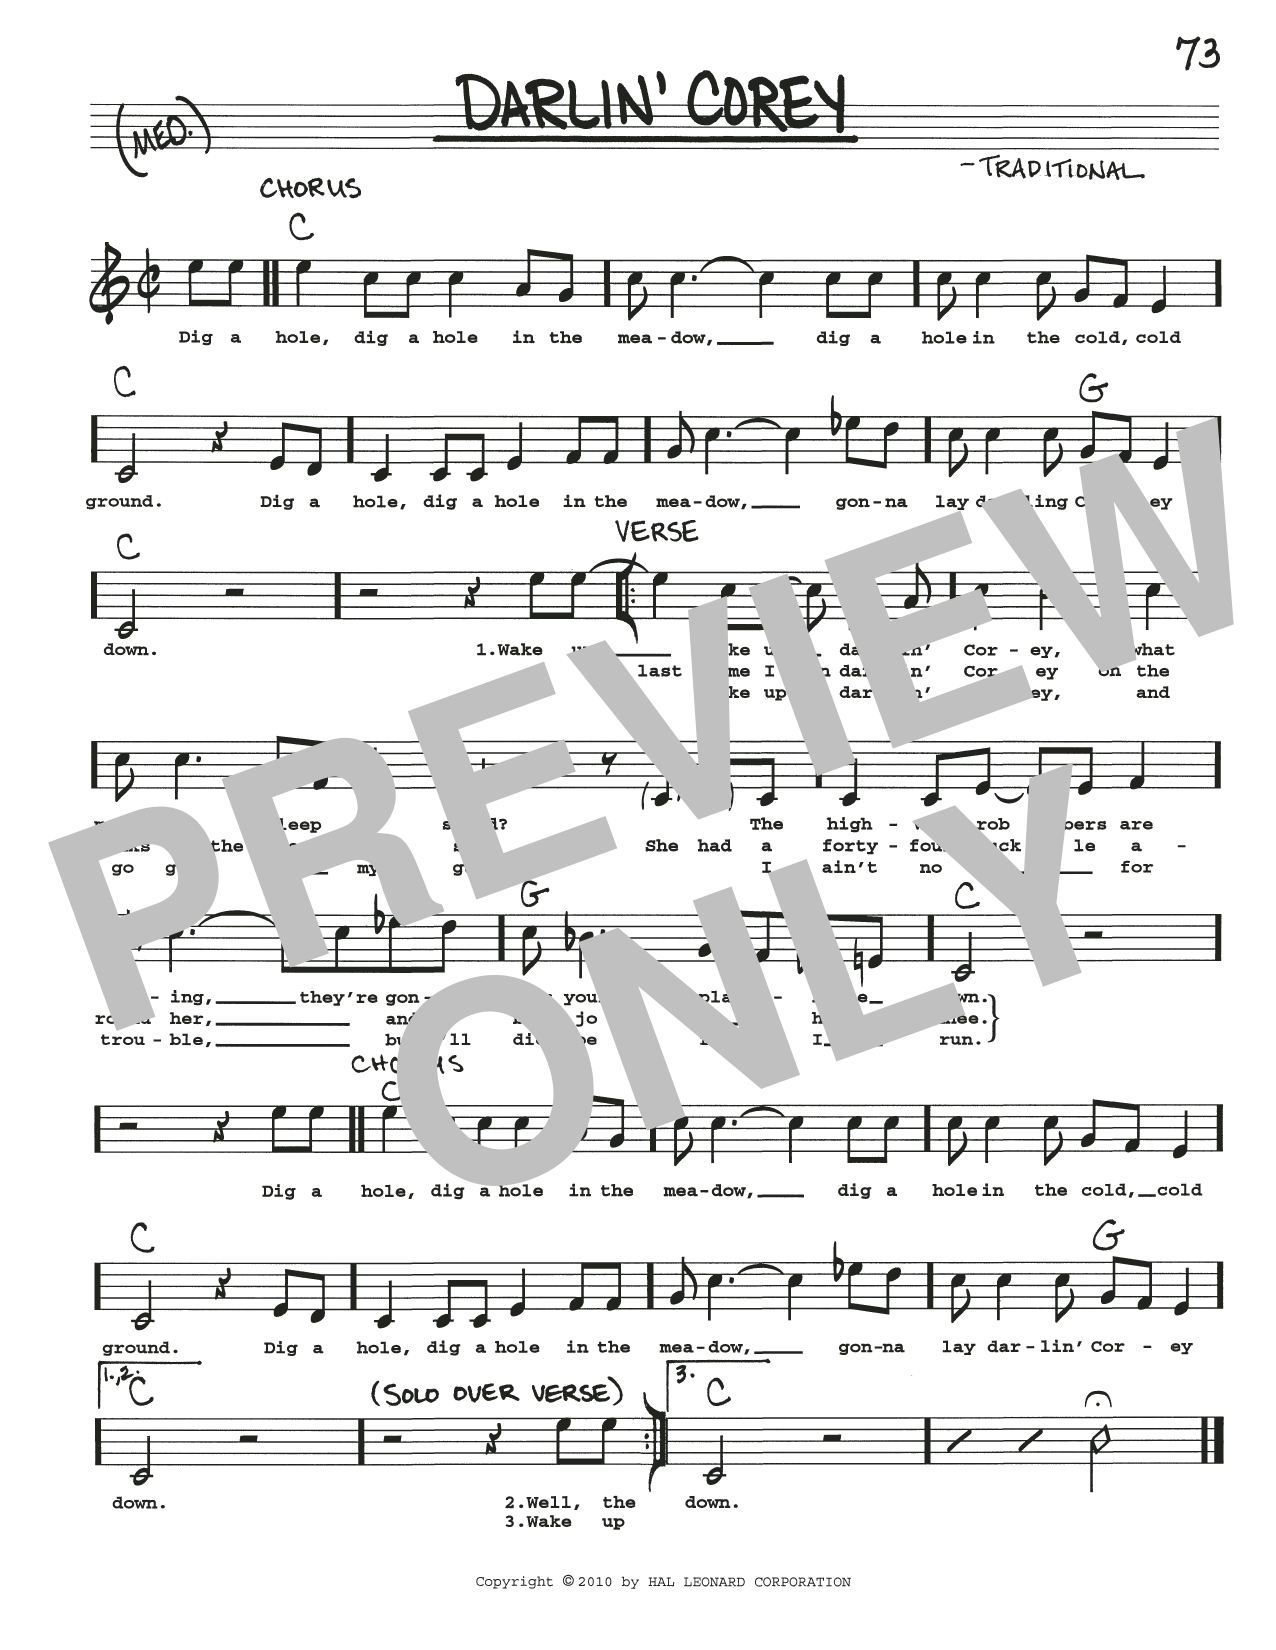 Traditional Darlin' Corey Sheet Music Notes & Chords for Real Book – Melody, Lyrics & Chords - Download or Print PDF